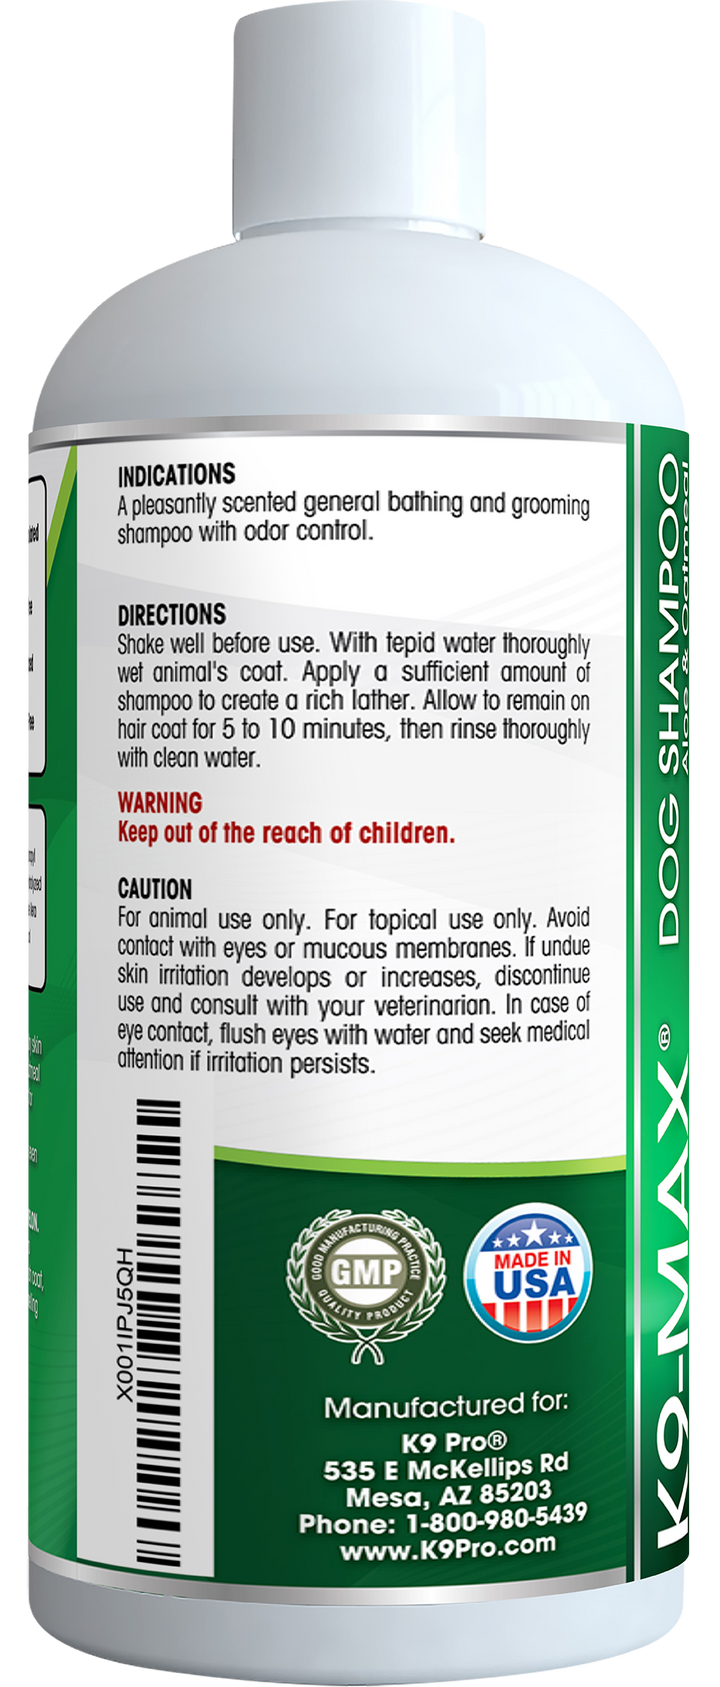 Oatmeal & Aloe Shampoo Dog Shampoo for Allergies